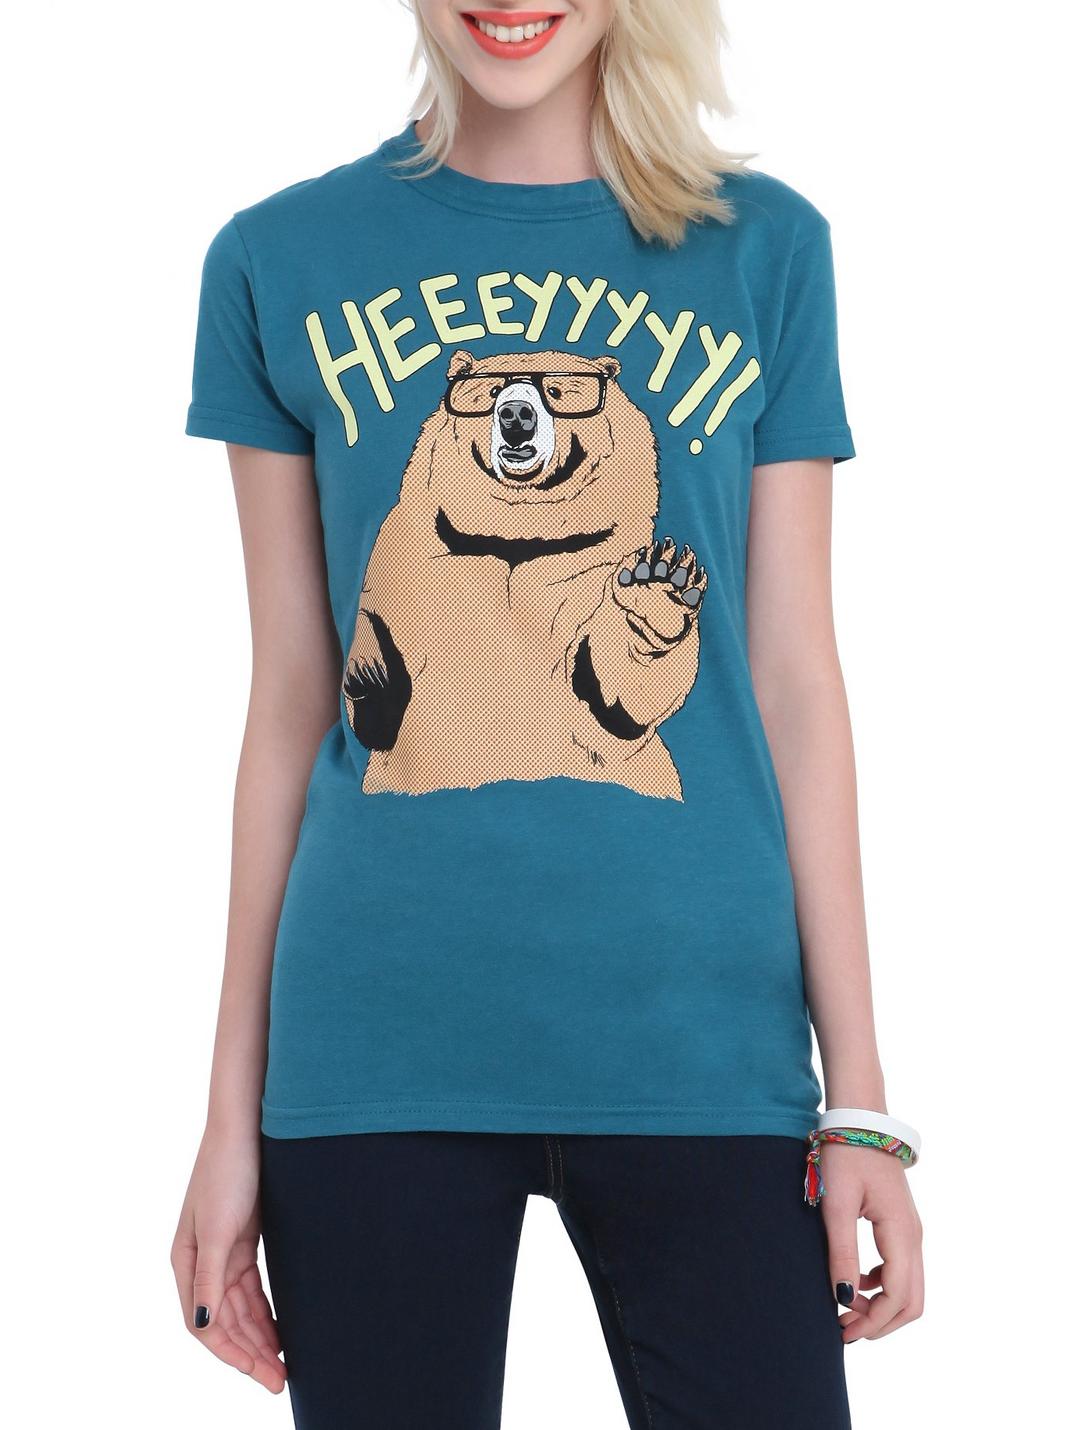 Heeeyyyyy! Bear Girls T-Shirt, TEAL, hi-res